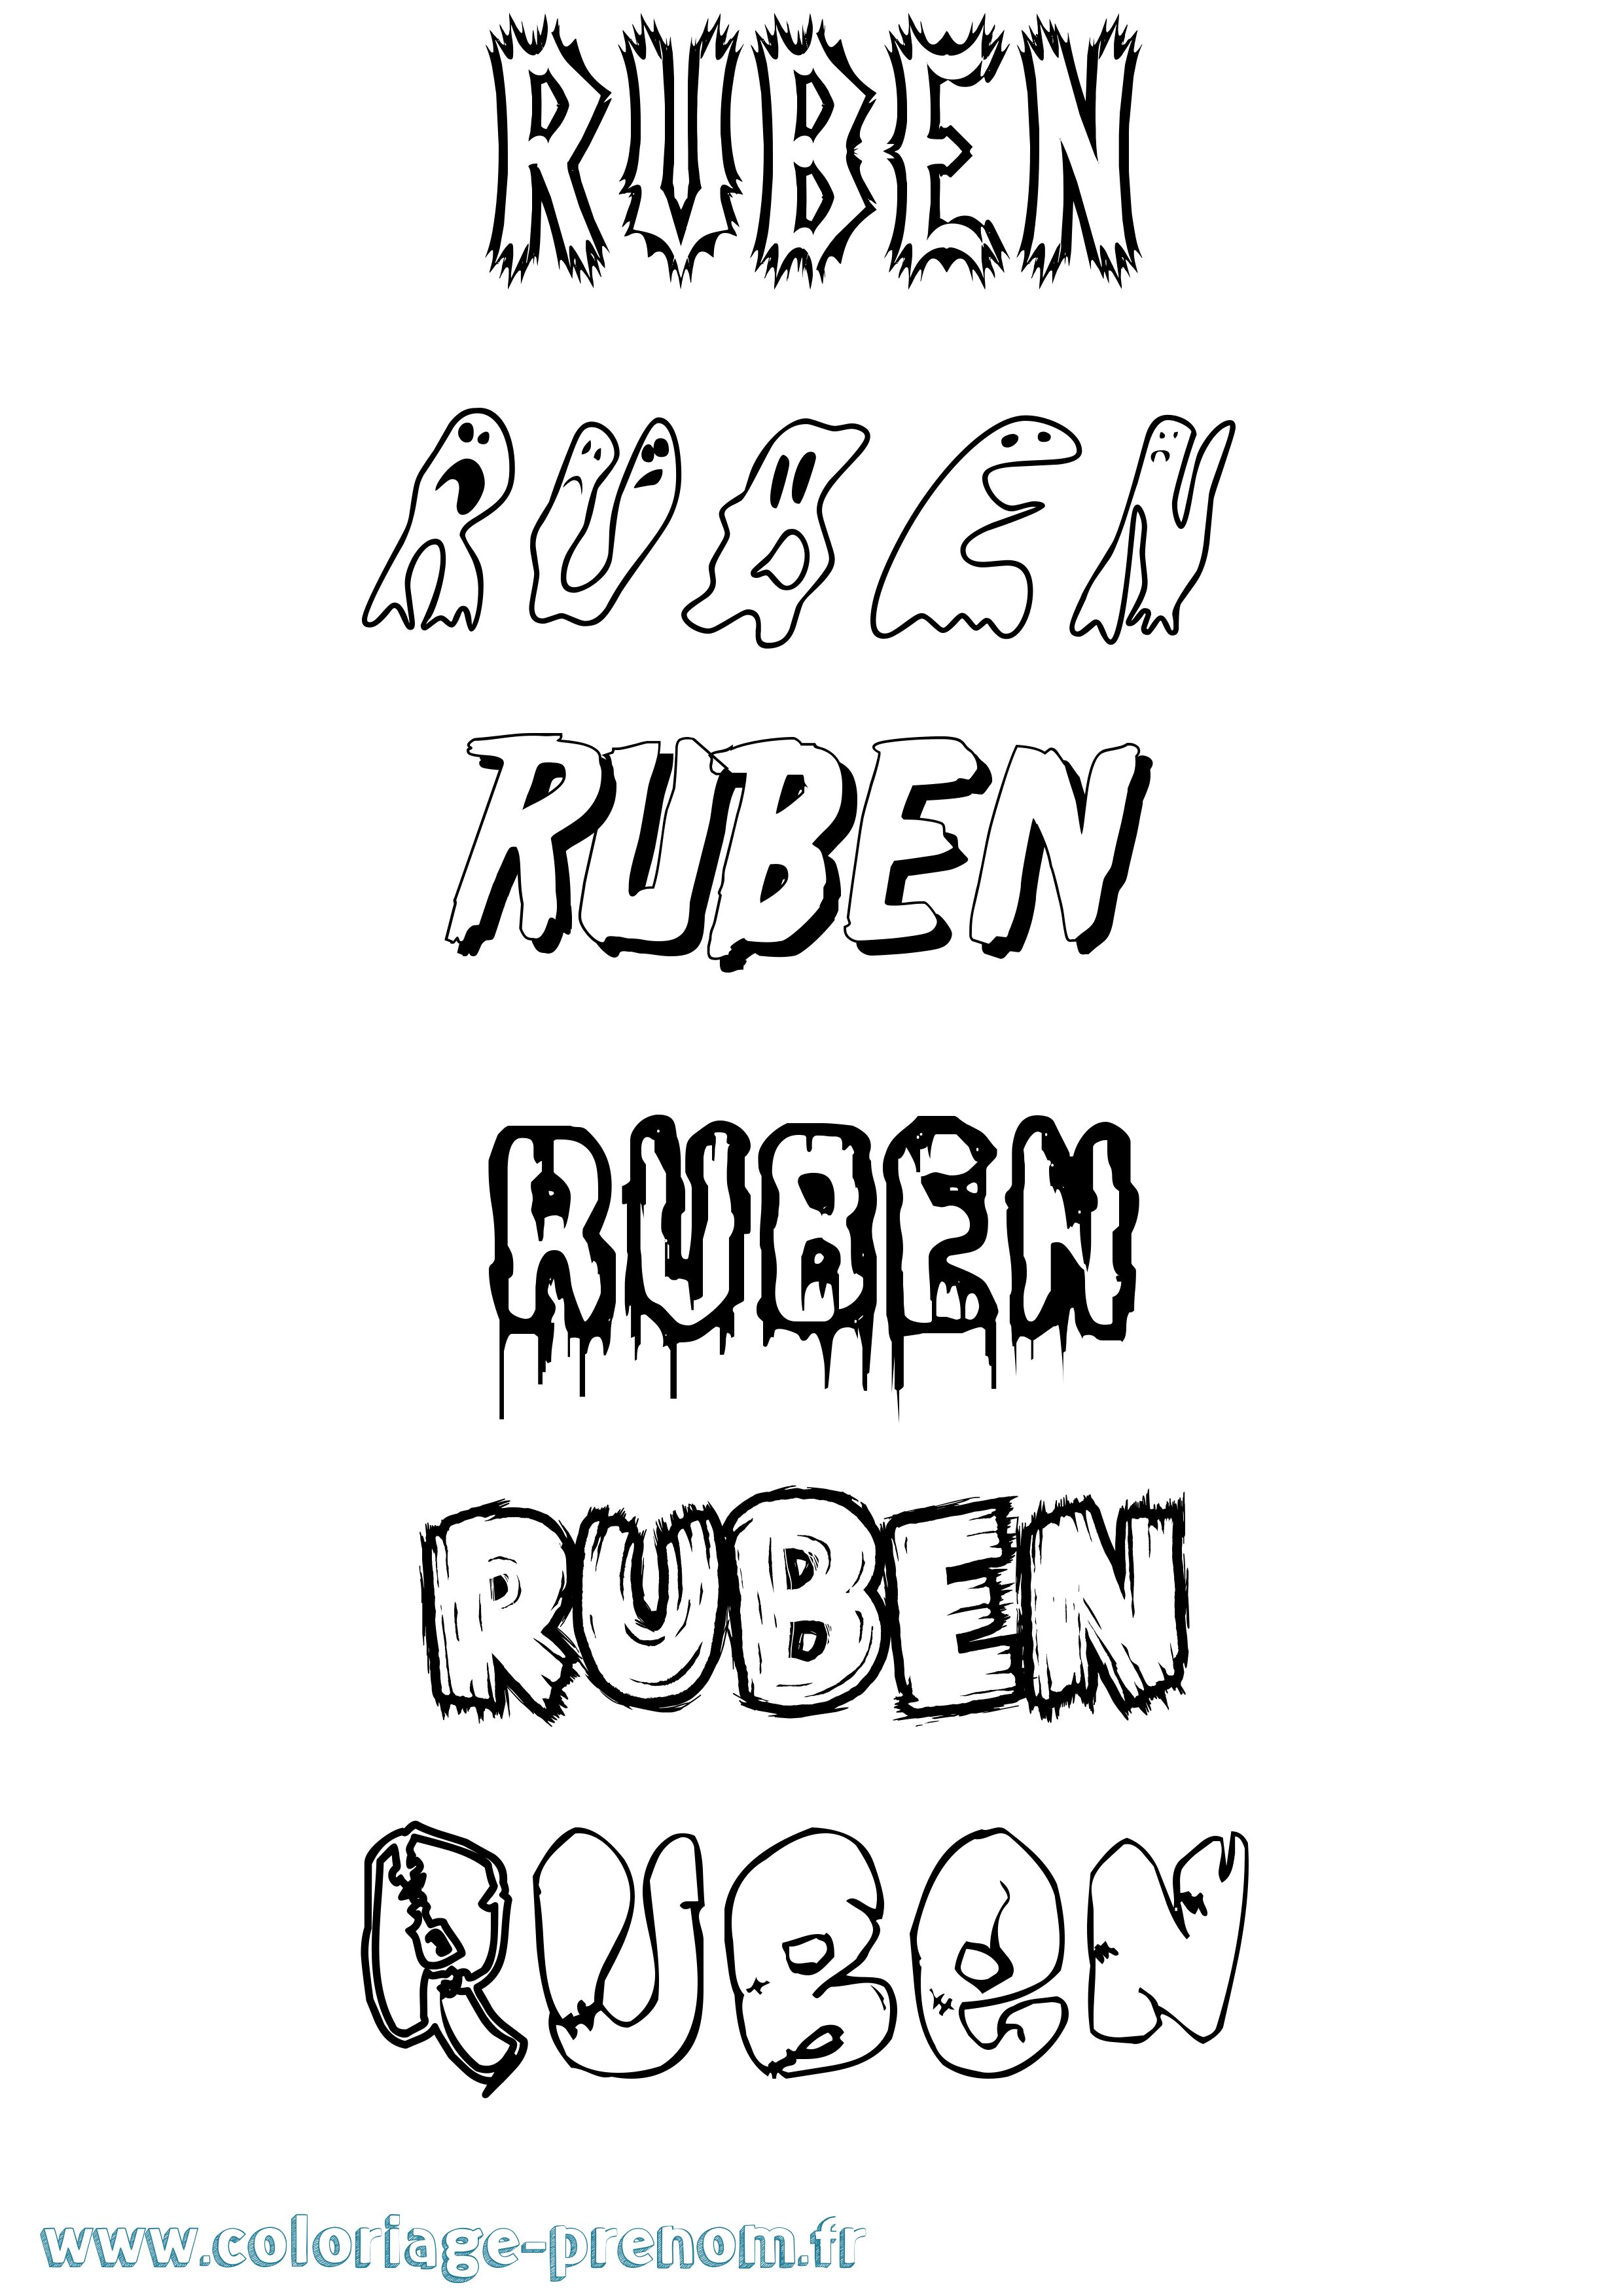 Coloriage prénom Ruben Frisson